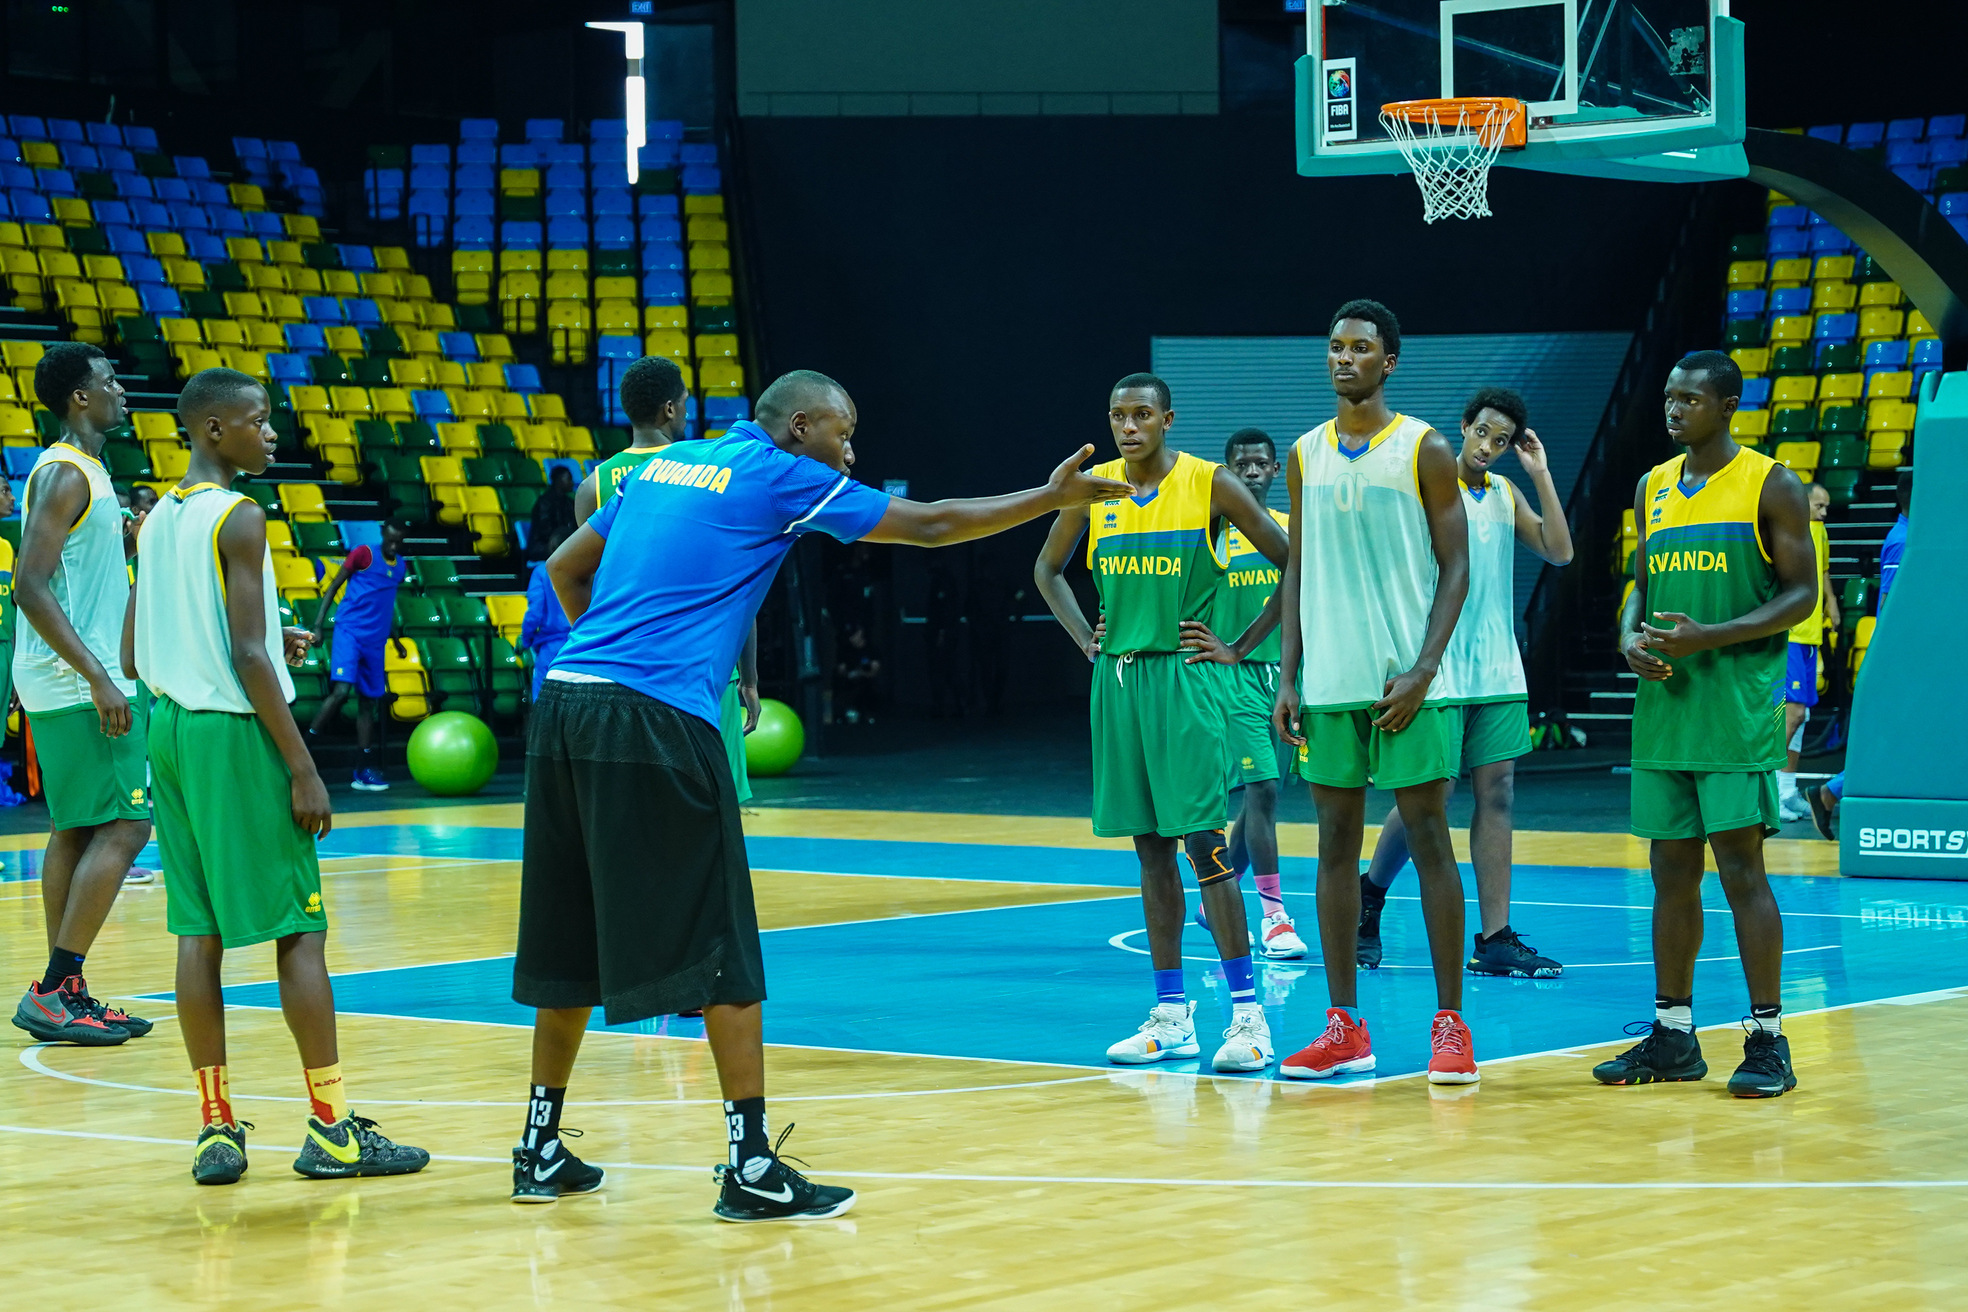 U-18 boys' national basketball team follow the coach's instruction during a training session at BK Arena on June 7. Dan Nsengiyumva 